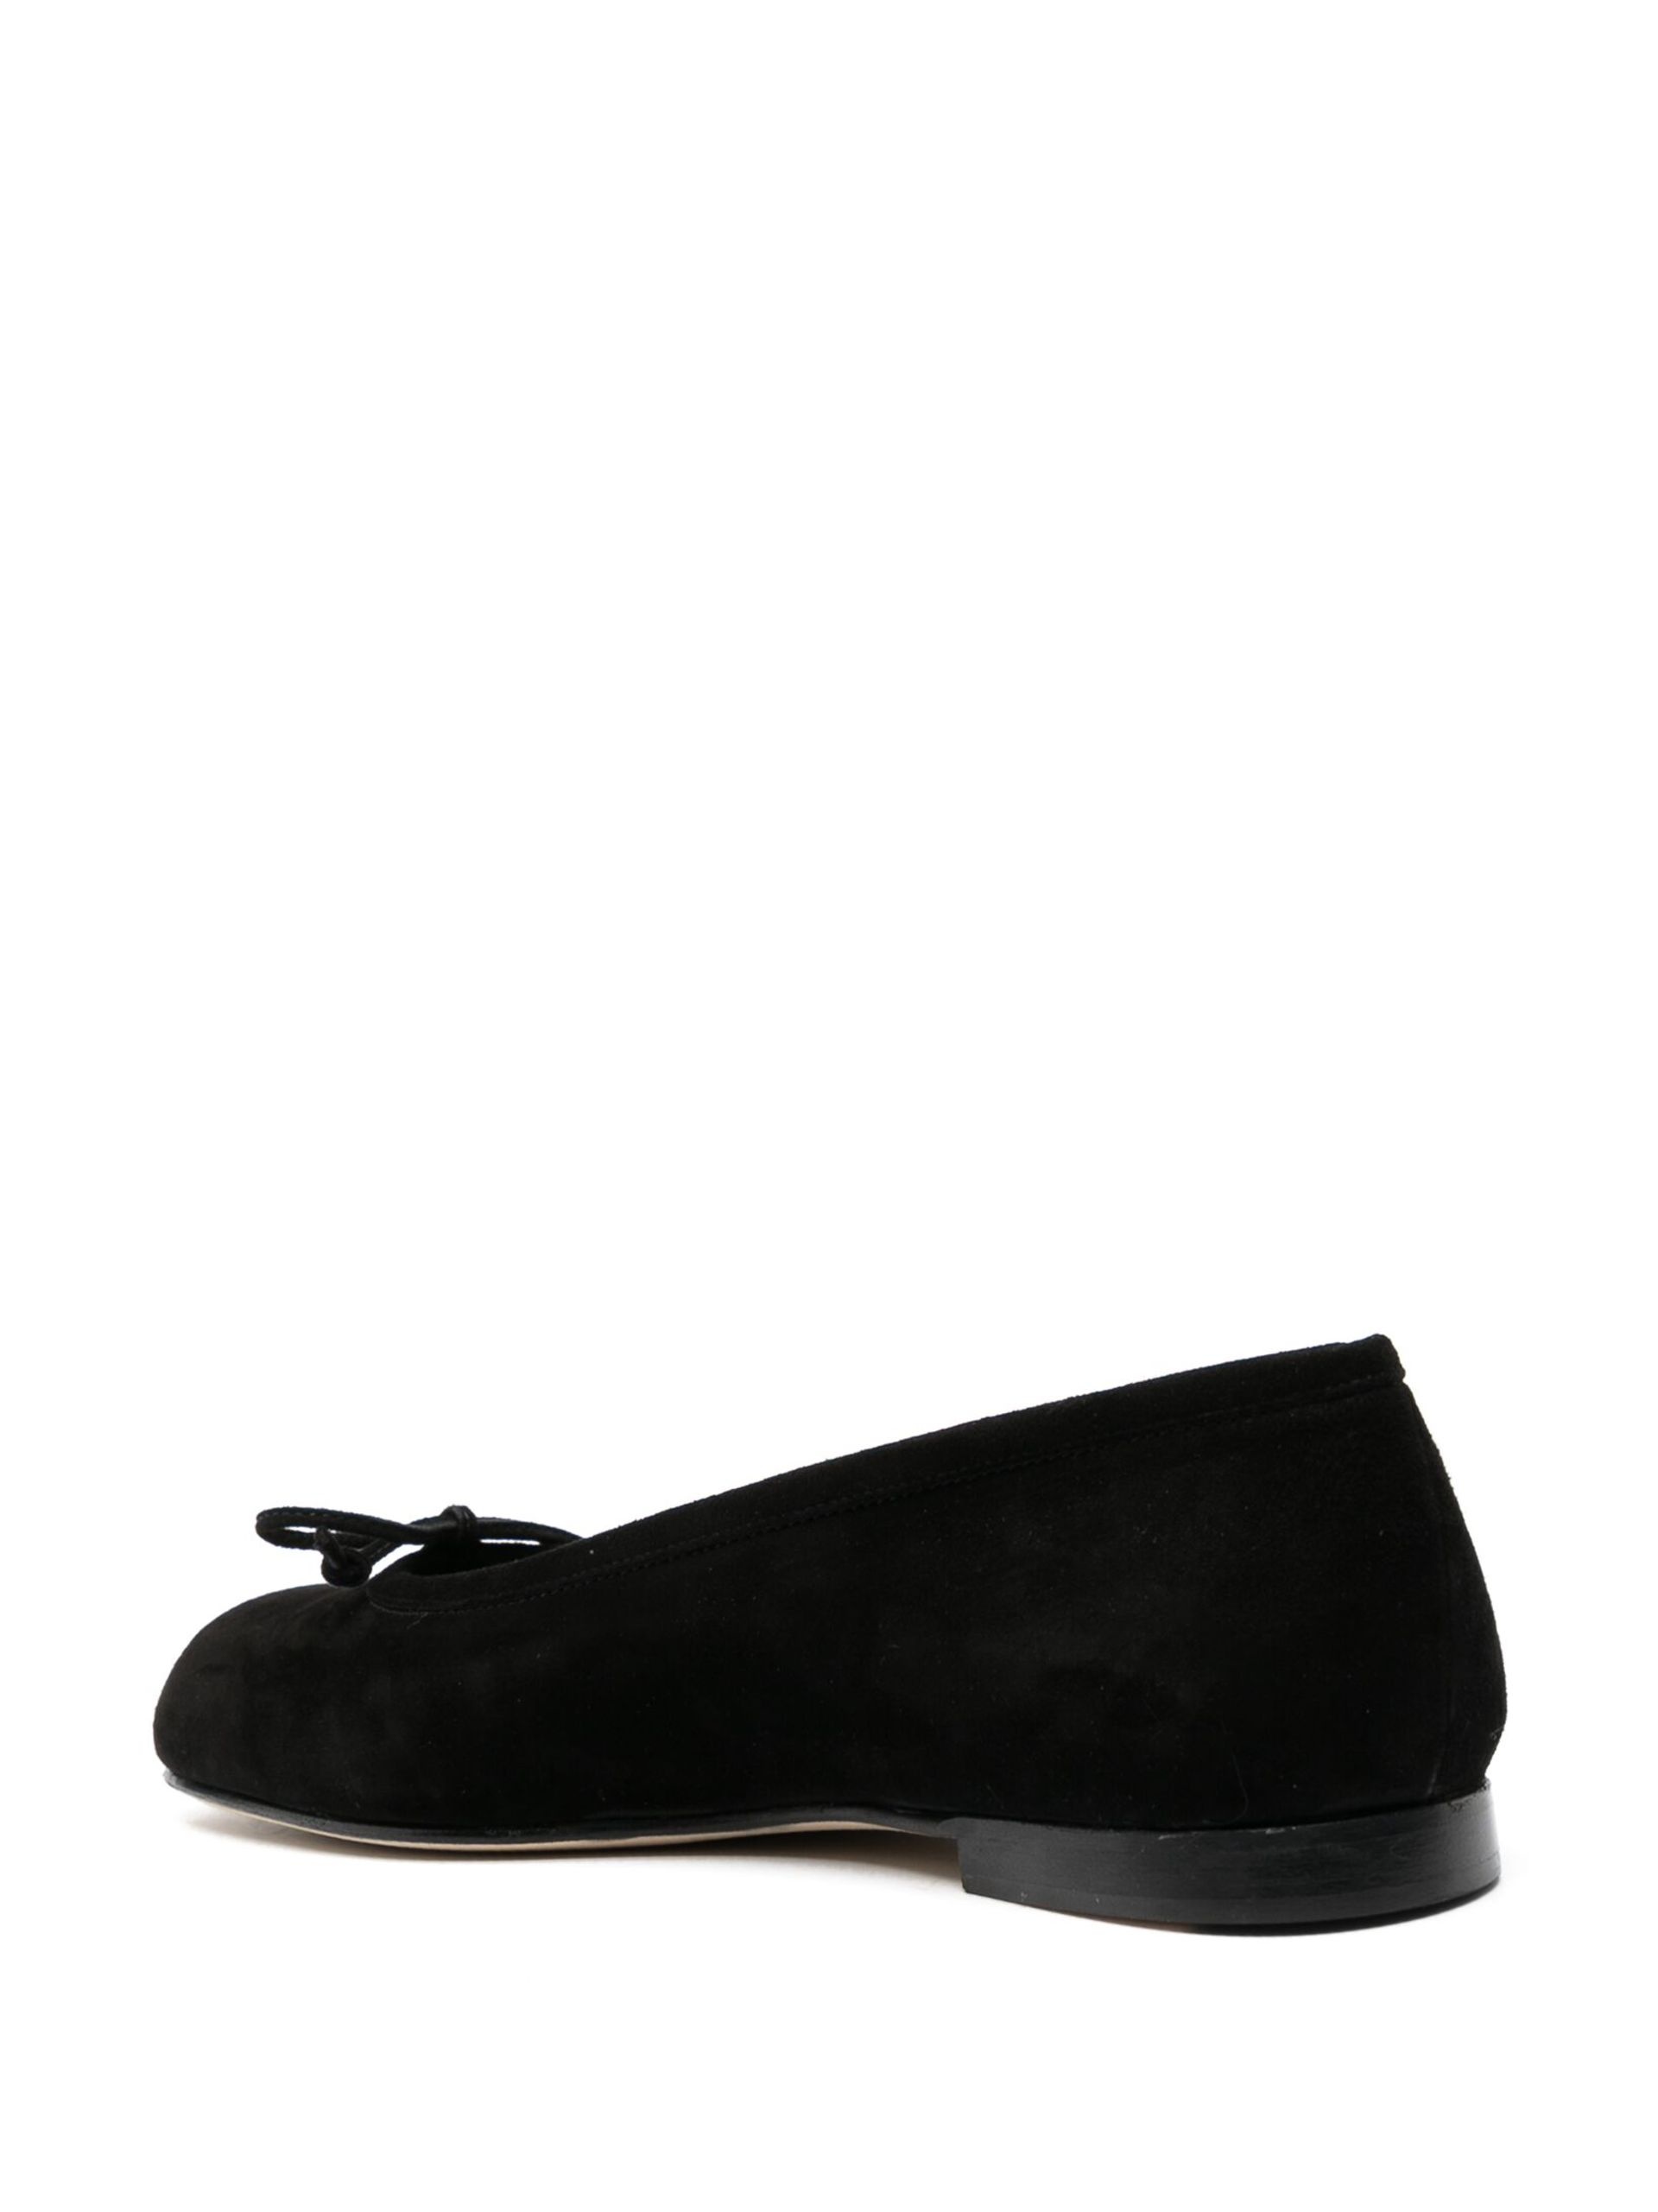 Black Veralli Leather Ballerina Shoes - 3